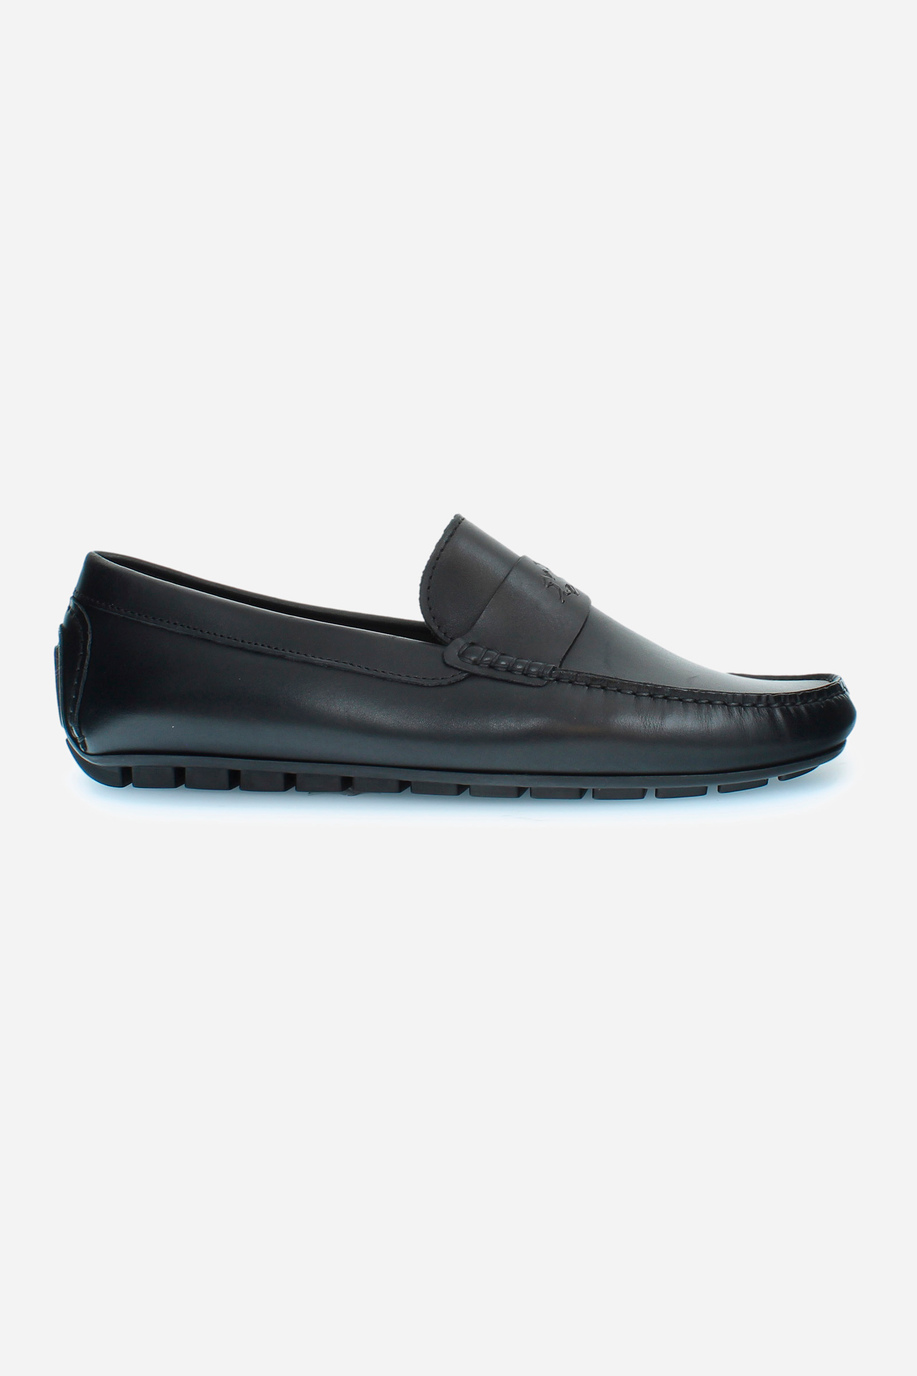 Men's leather loafers - Man shoes | La Martina - Official Online Shop